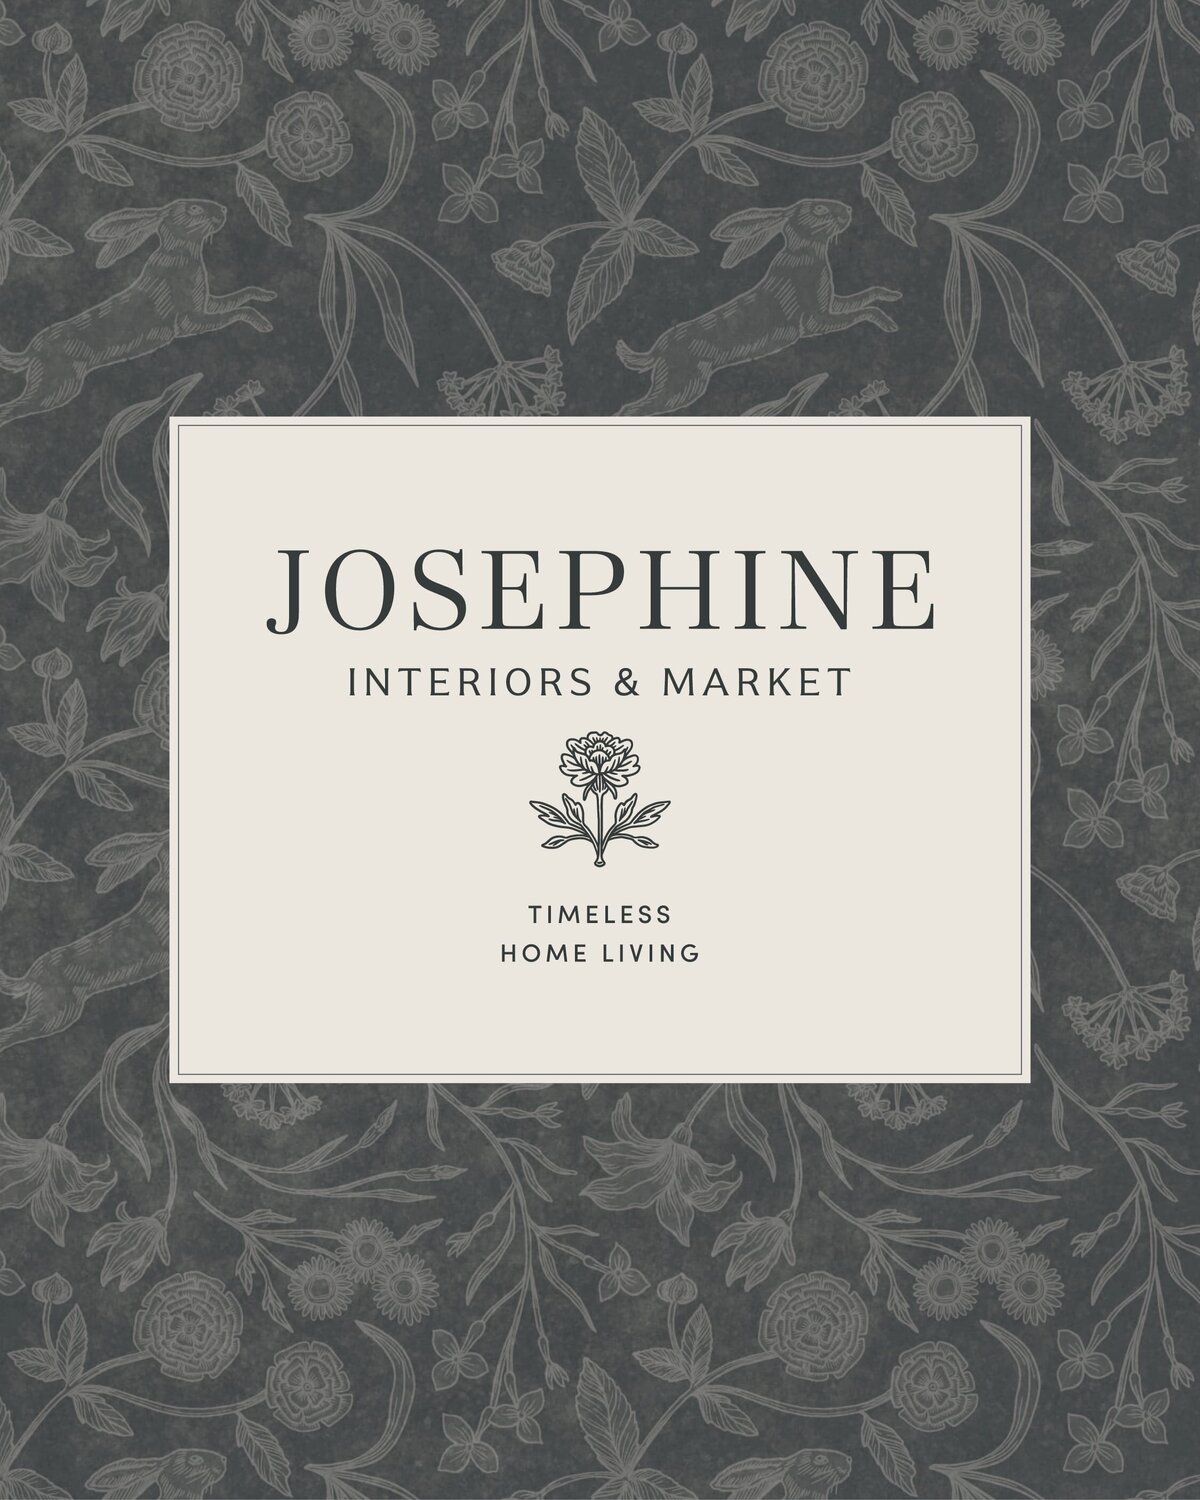 JosephineInteriors&Market_LaunchGraphics_Instagram5